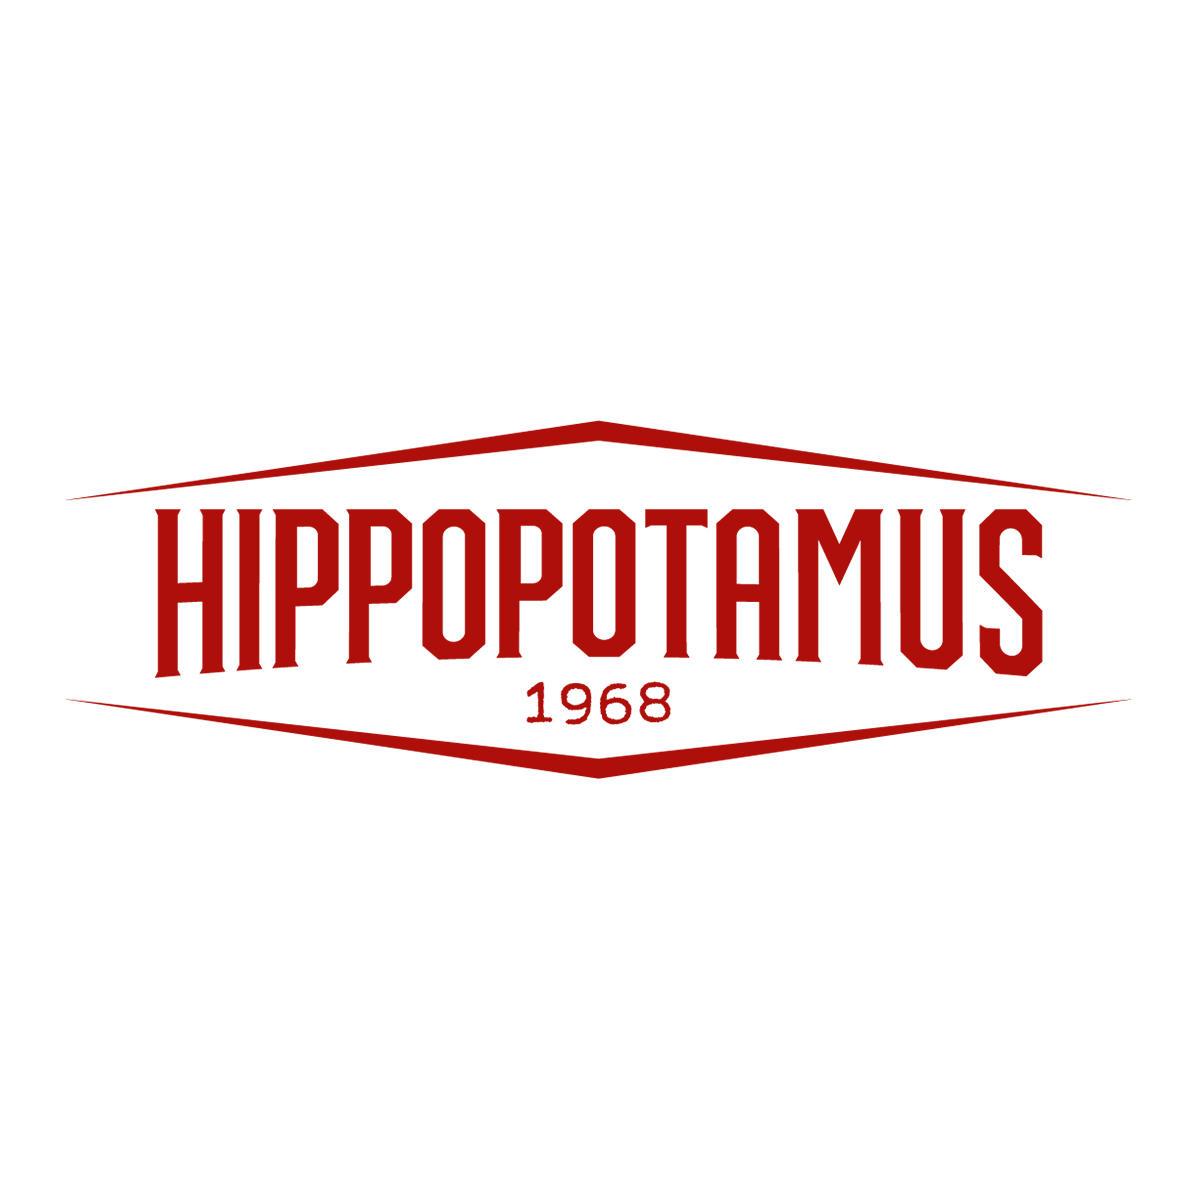 Hippopotamus Steakhouse Cergy